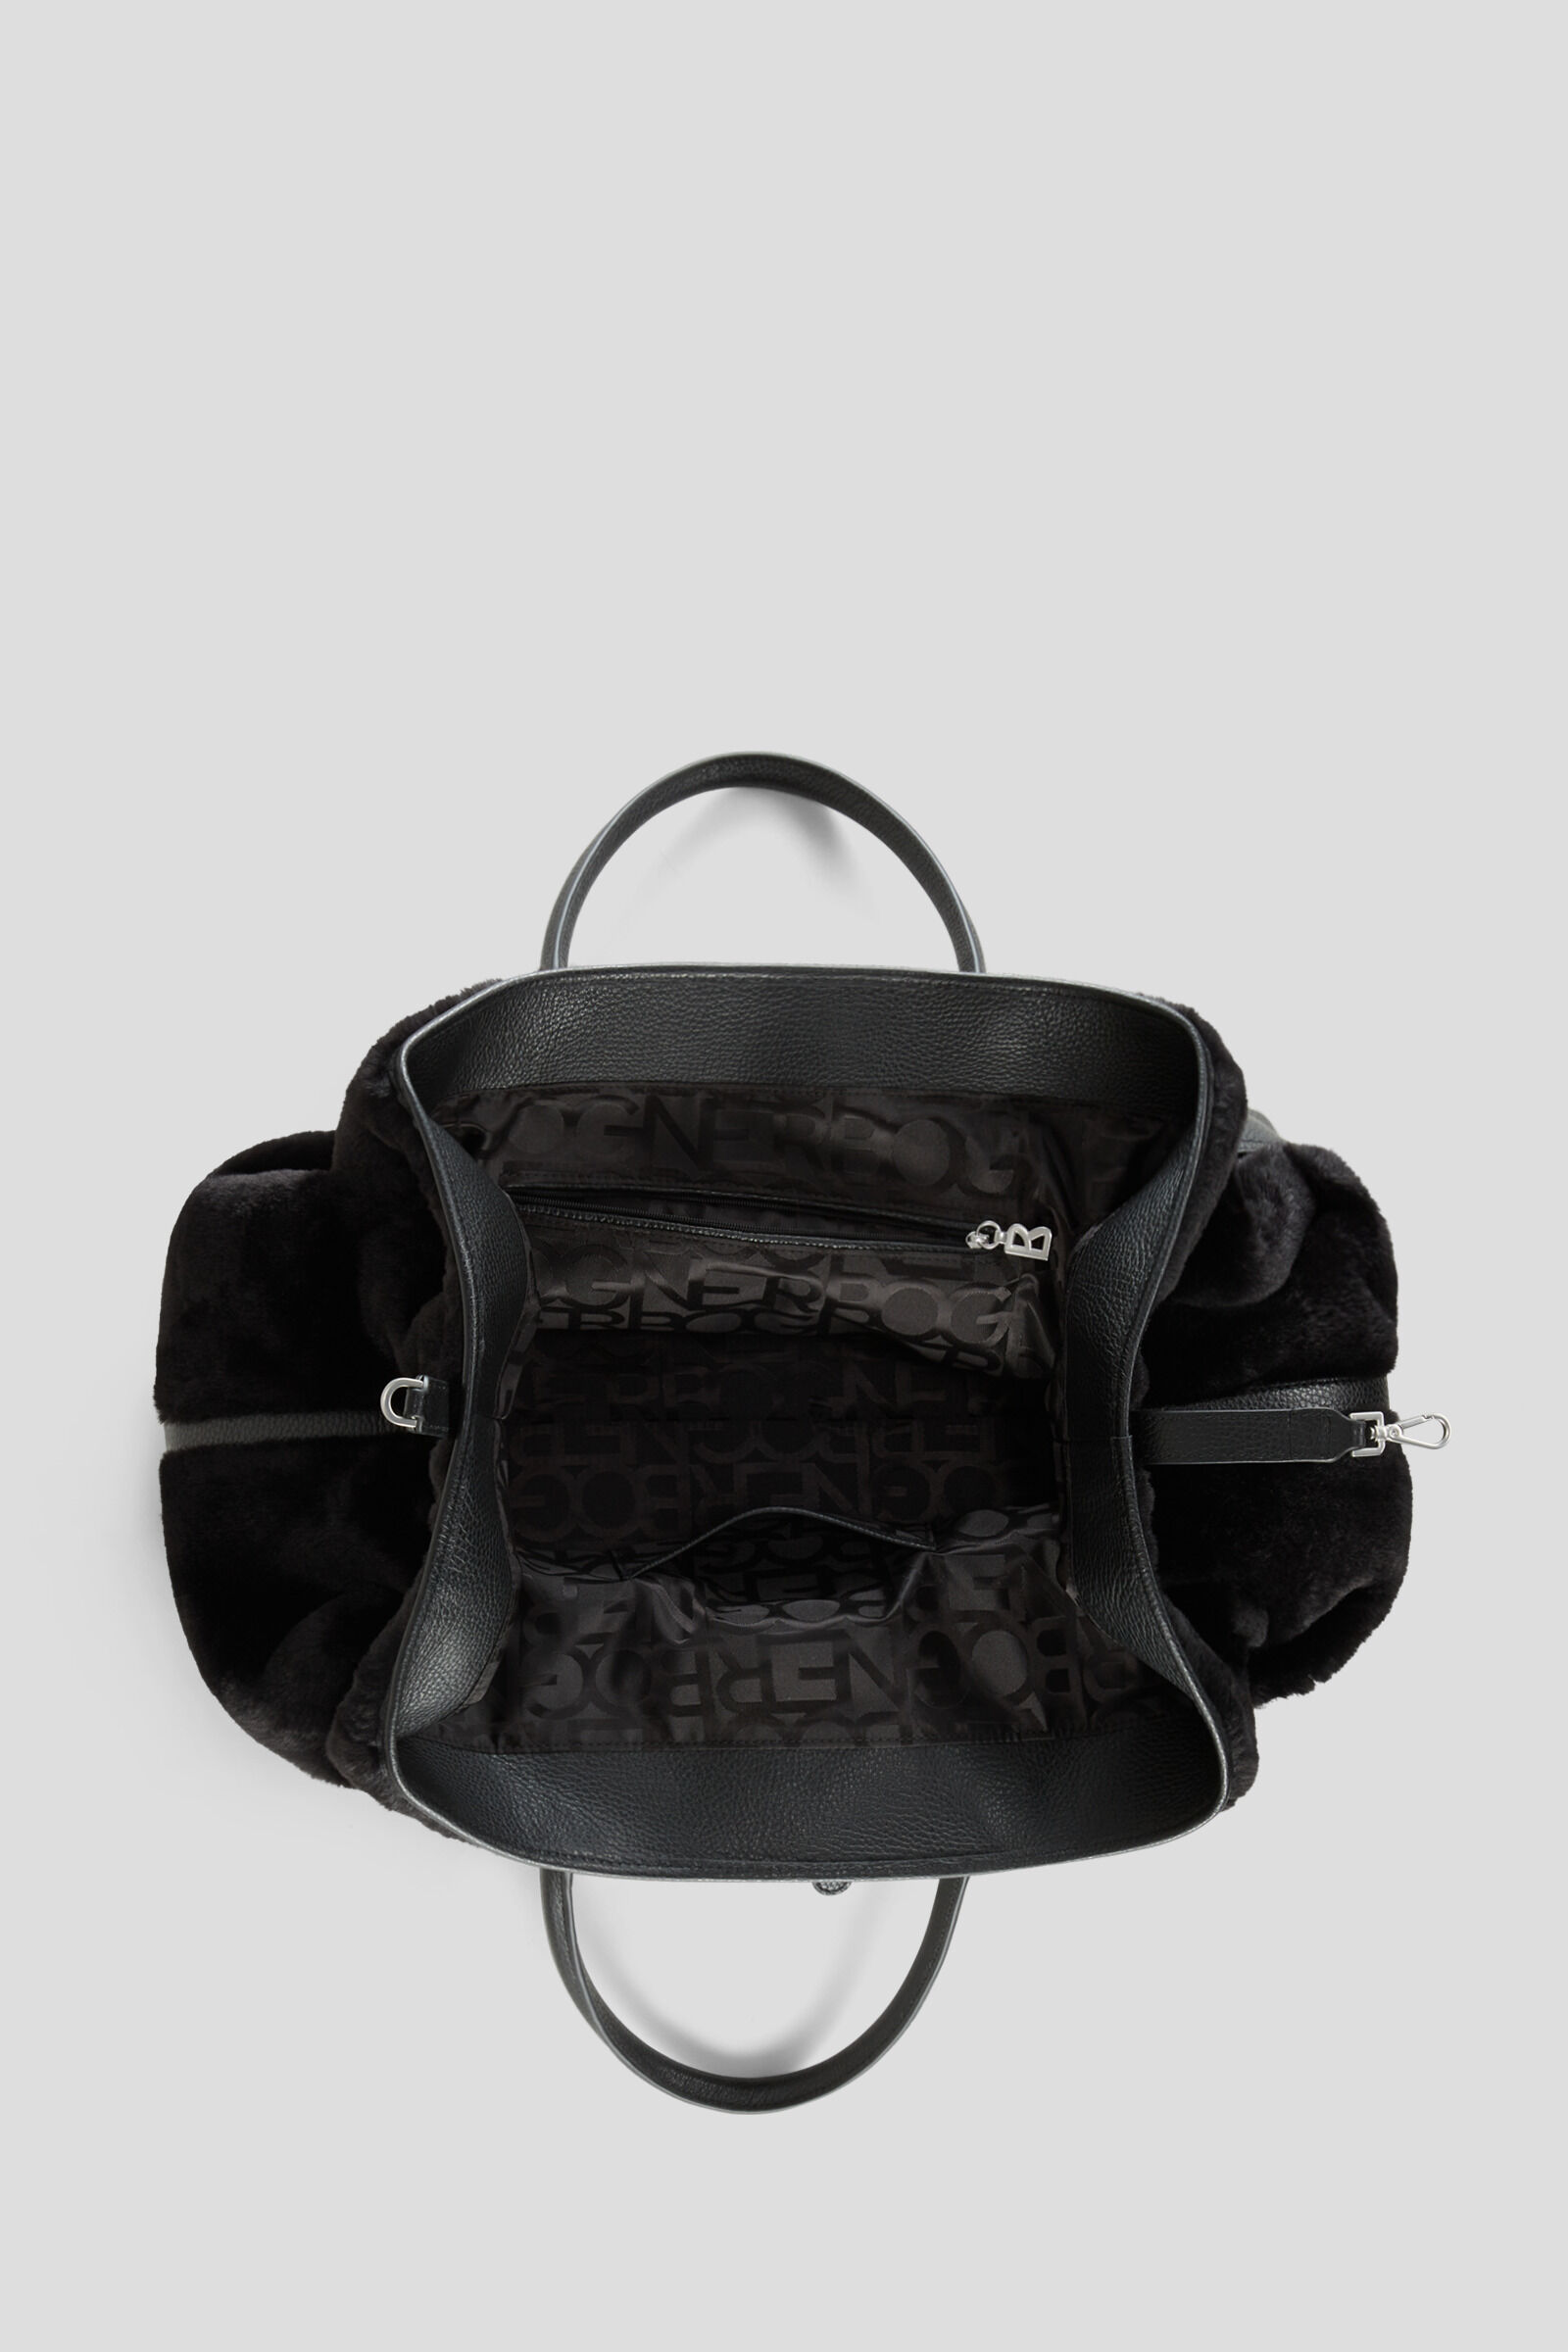 Theresa - Genuine Leather handbag